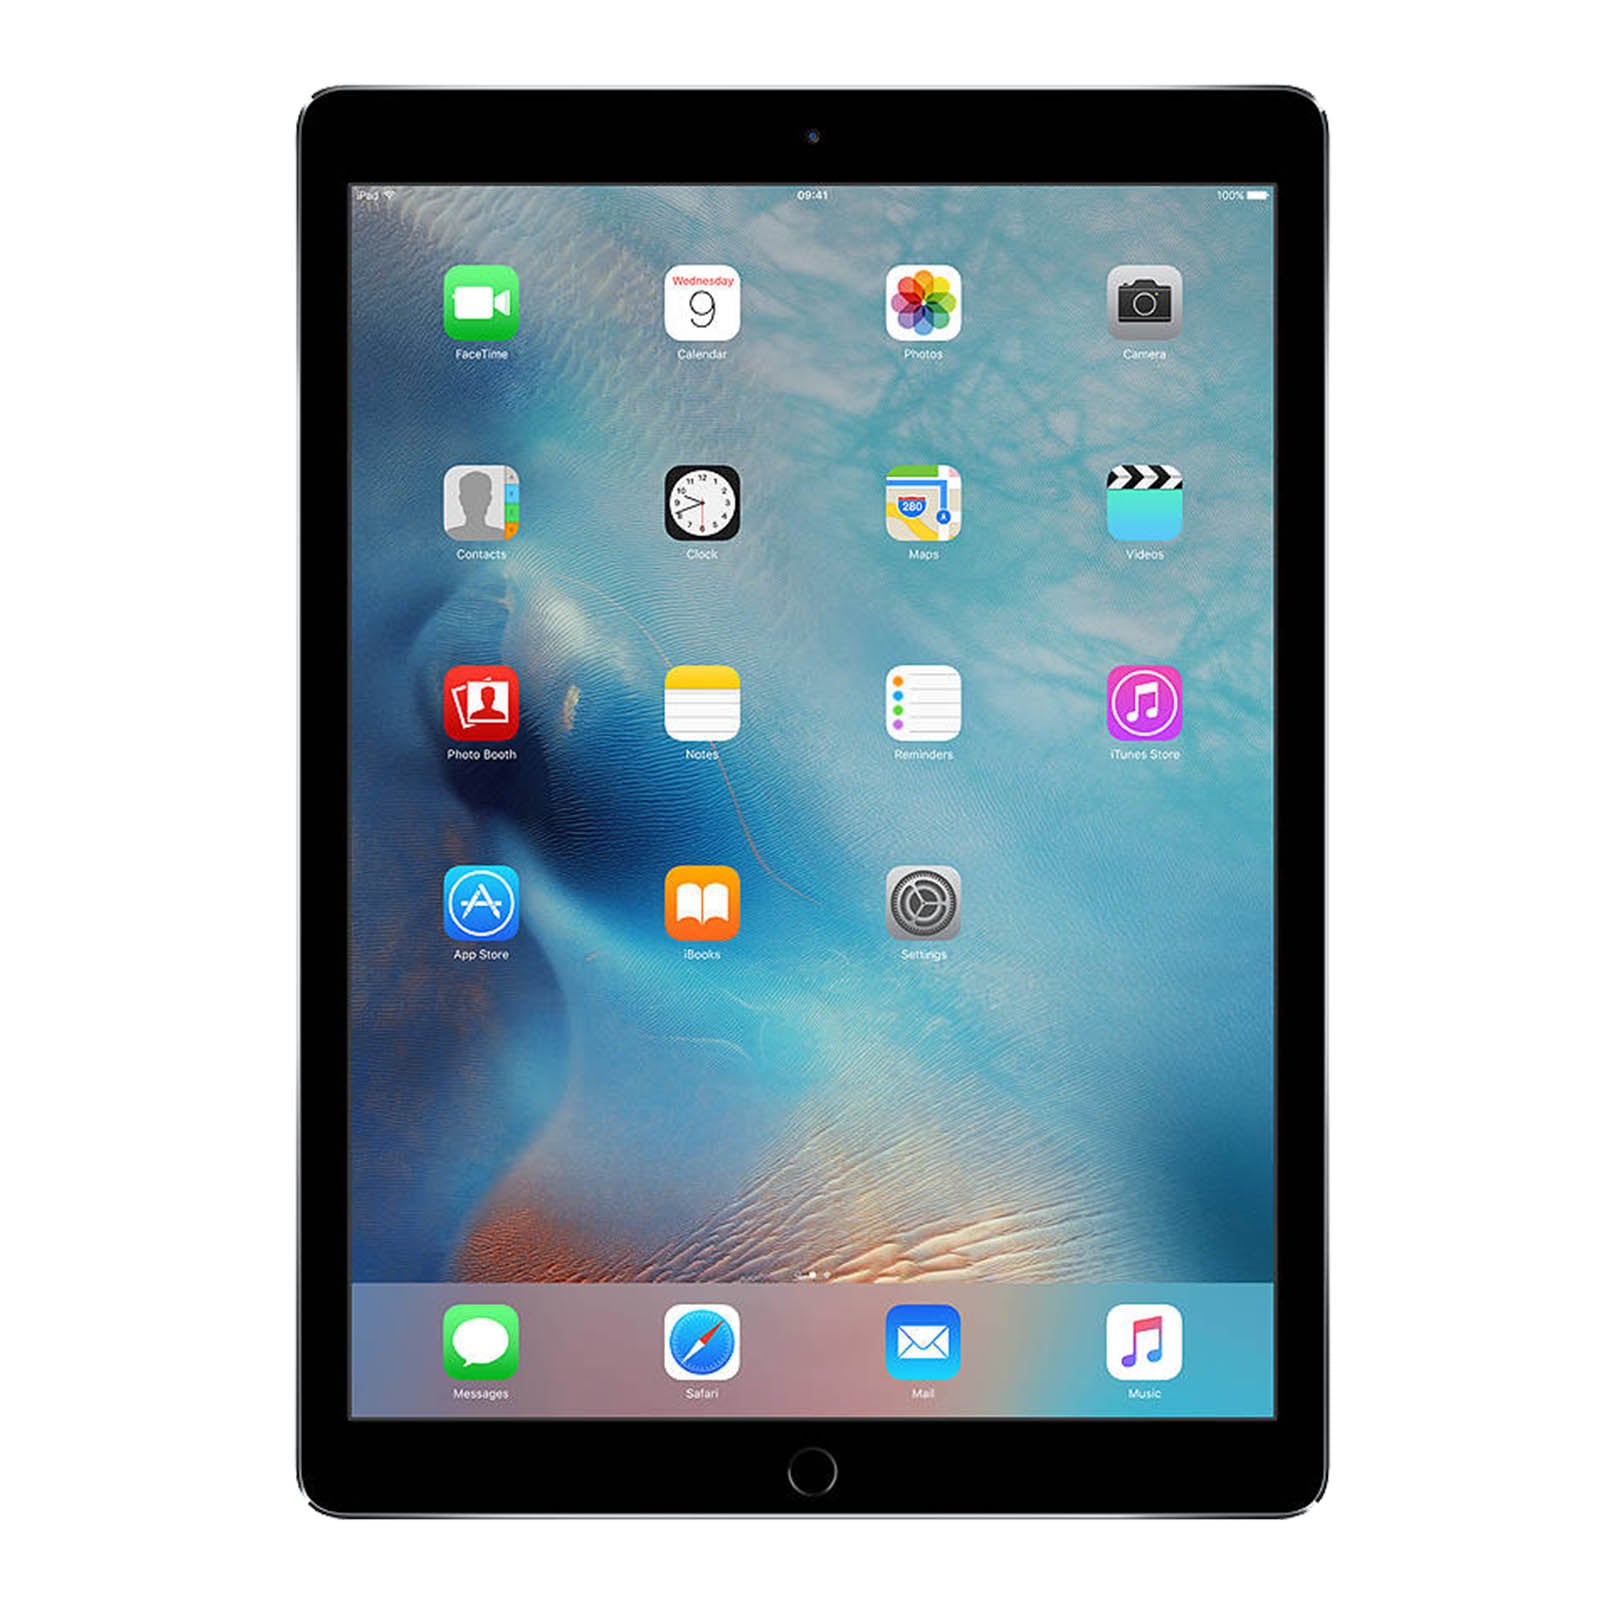 iPad Pro 12.9 Inch 2nd Gen 64GB Space Grey Pristine - WiFi